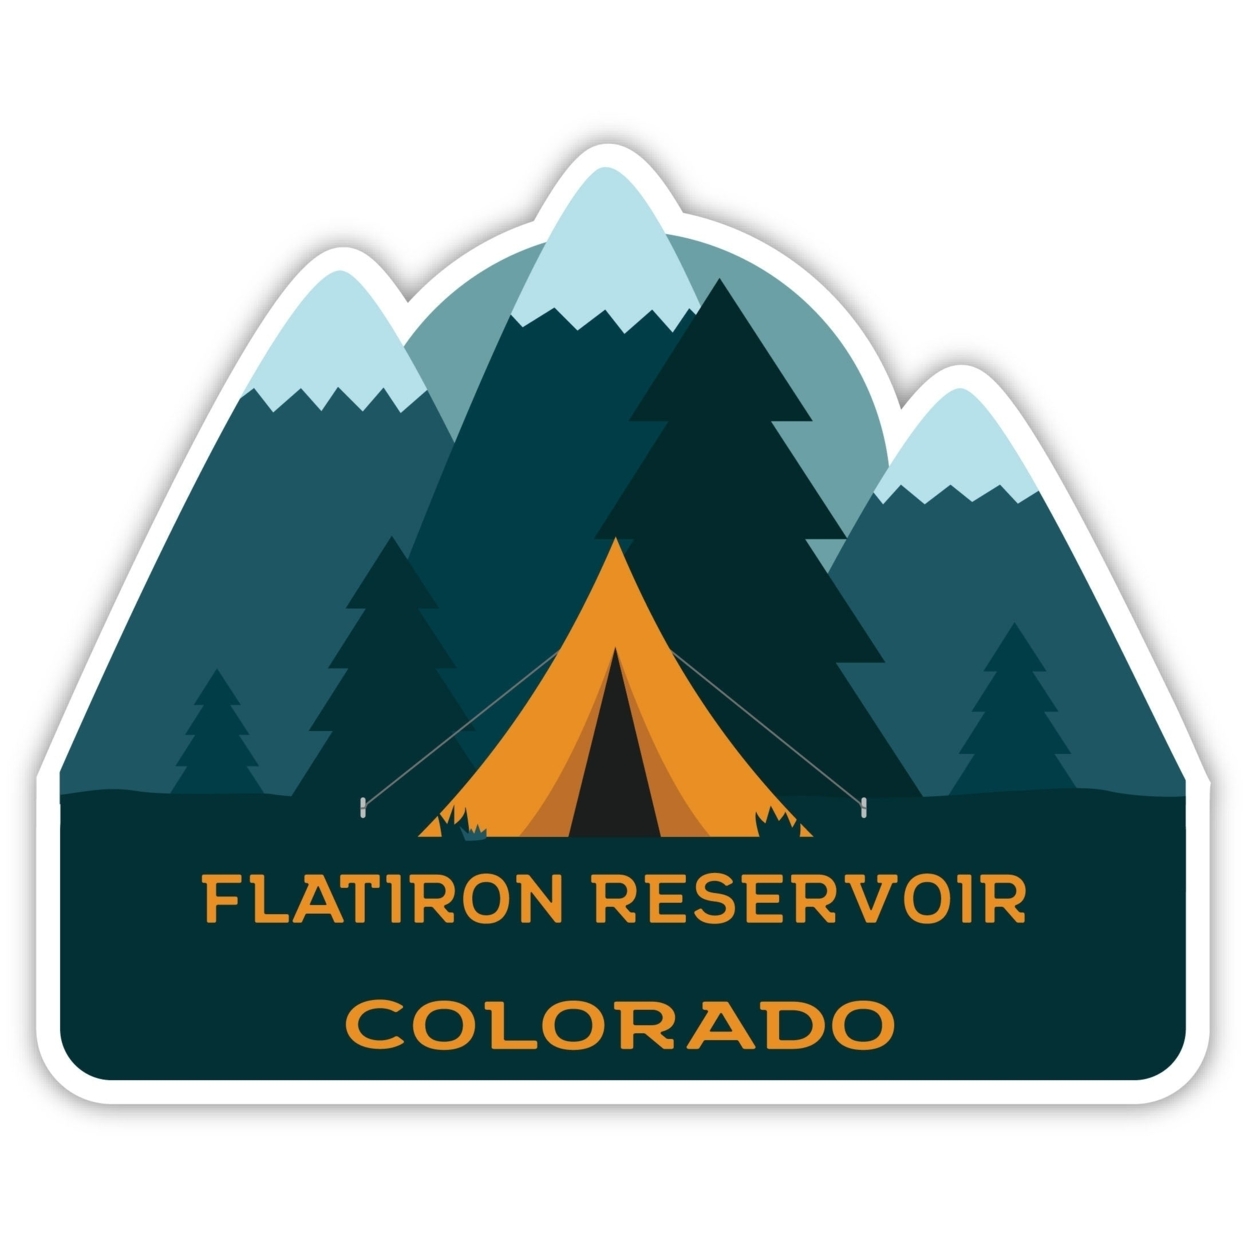 Flatiron Reservoir Colorado Souvenir Decorative Stickers (Choose Theme And Size) - 4-Pack, 8-Inch, Tent